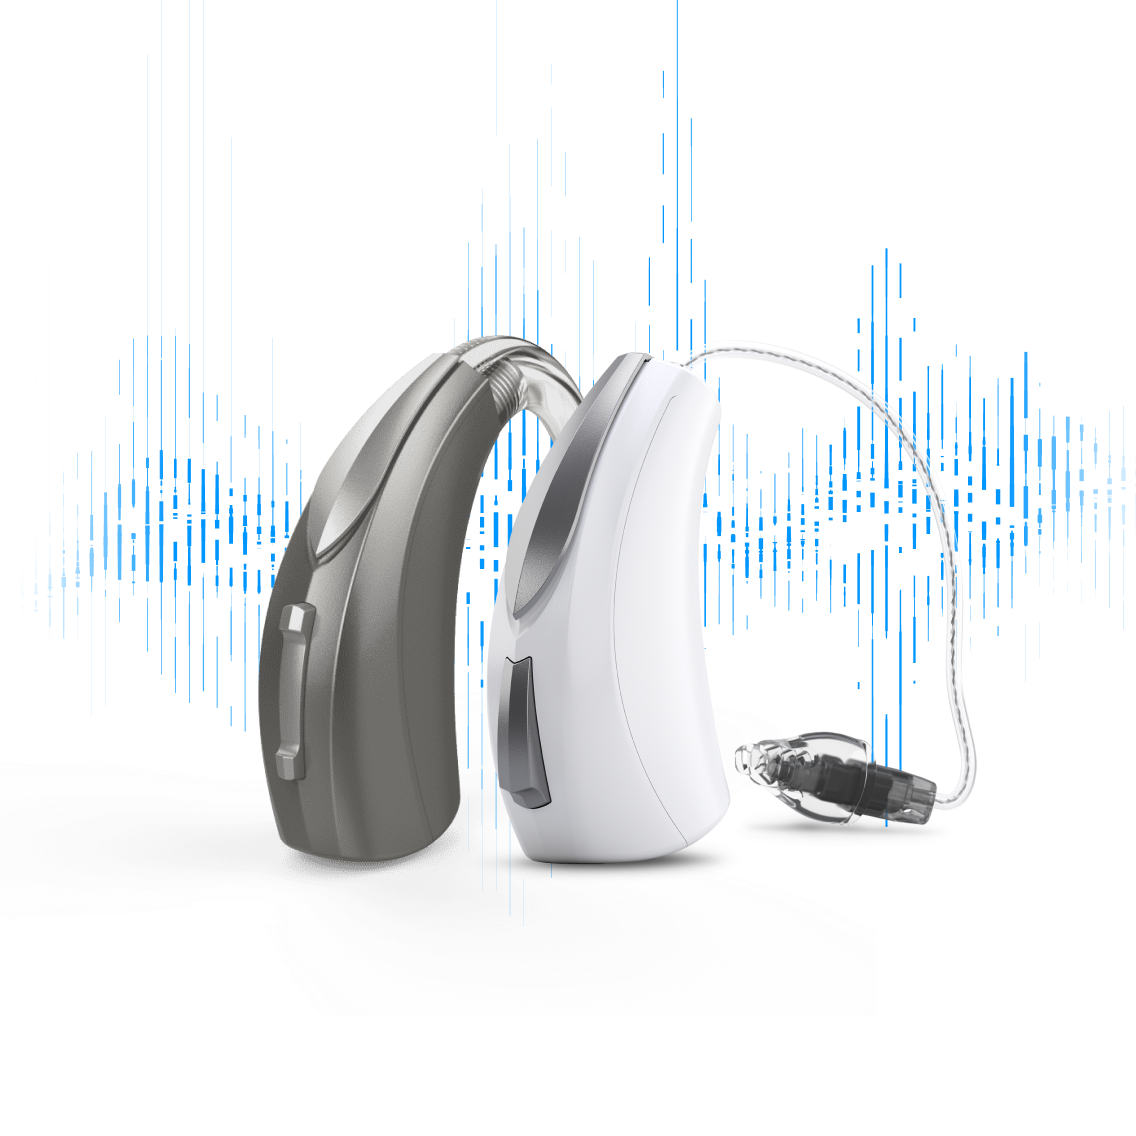 Tinnitus-Hörgeräte, Nulltarif, Kostenloser Hörtest, Hörgerät, 30 Tage kostenlos Testen, Starkey, Starkey Hörgerät, Hörgerät mit Bluetooth, Tinnitus